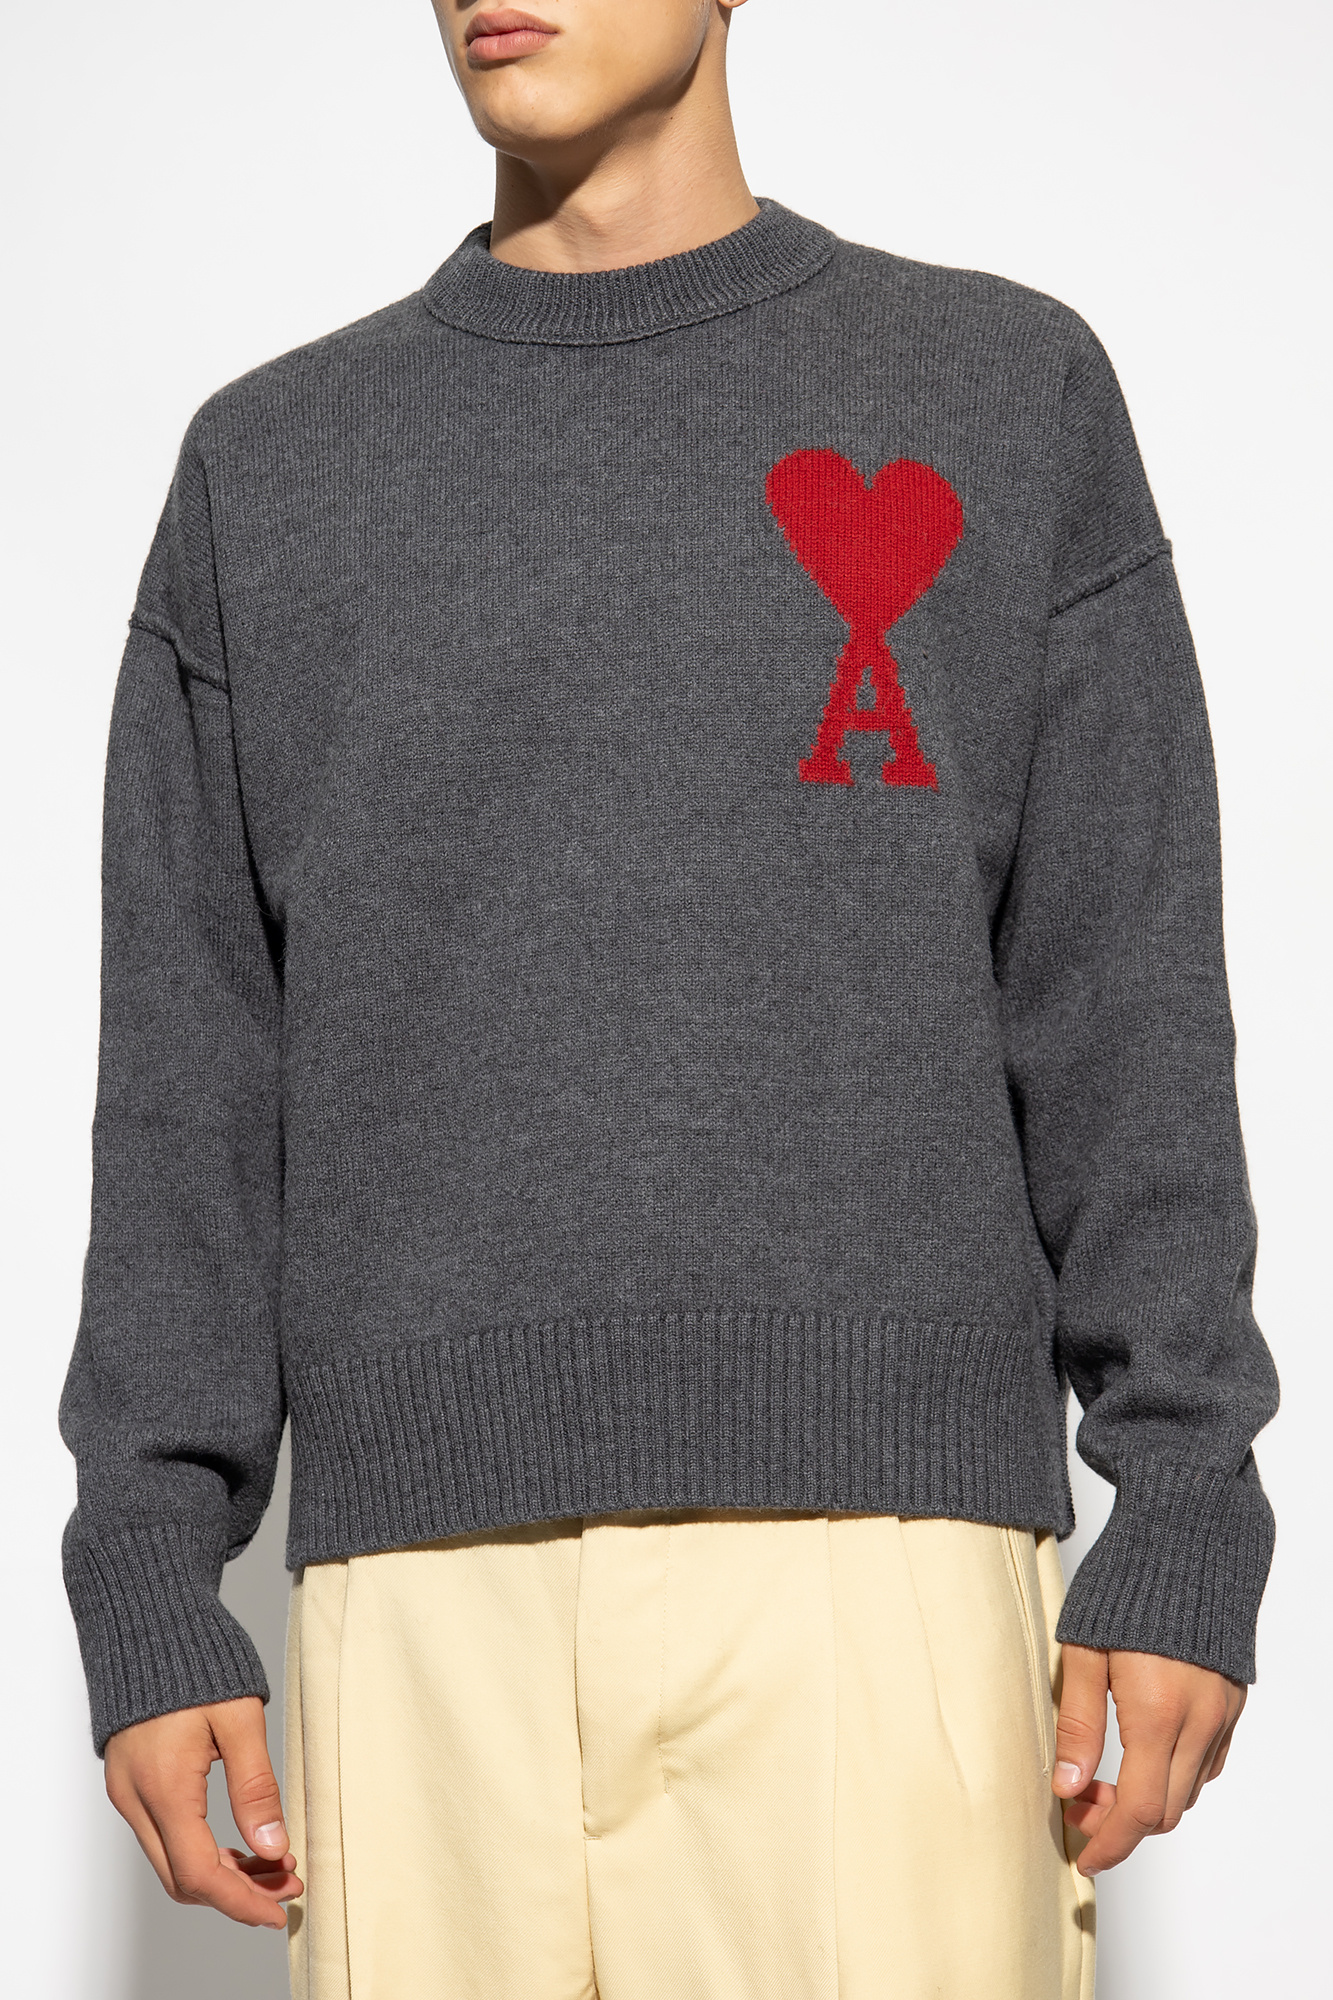 Reebok Reheritage T Shirt Junior Boys Sweater with logo